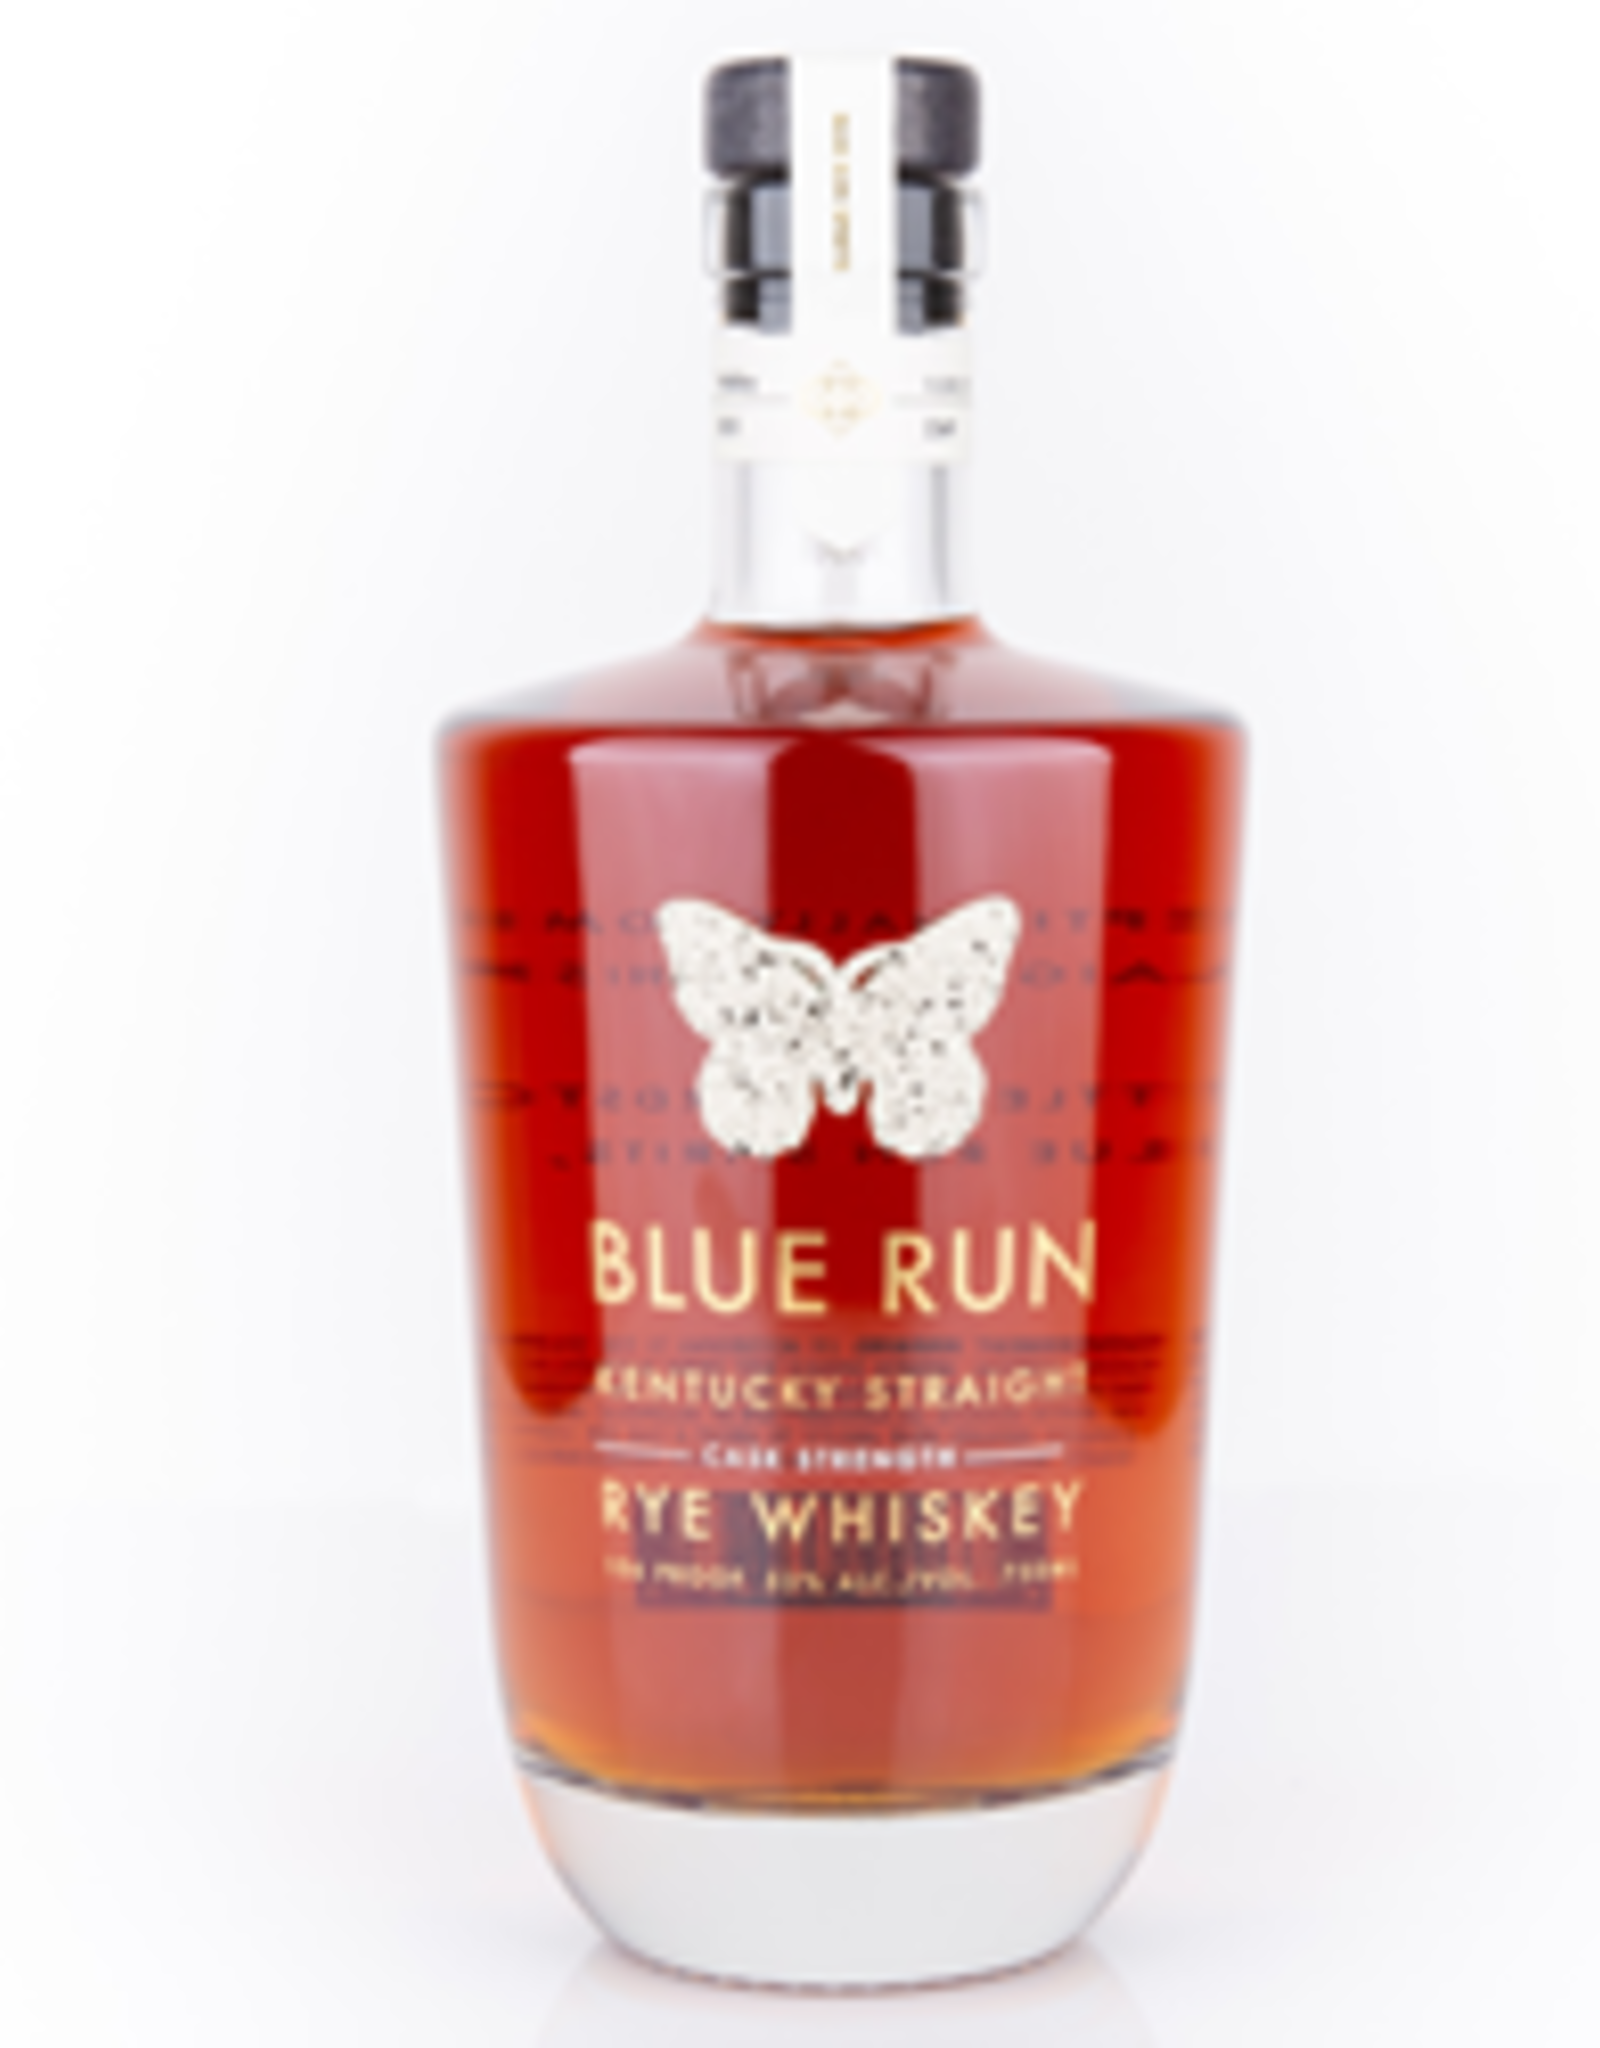 Blue Run Blue Run Rye Whiskey Cask Strength 750 mL